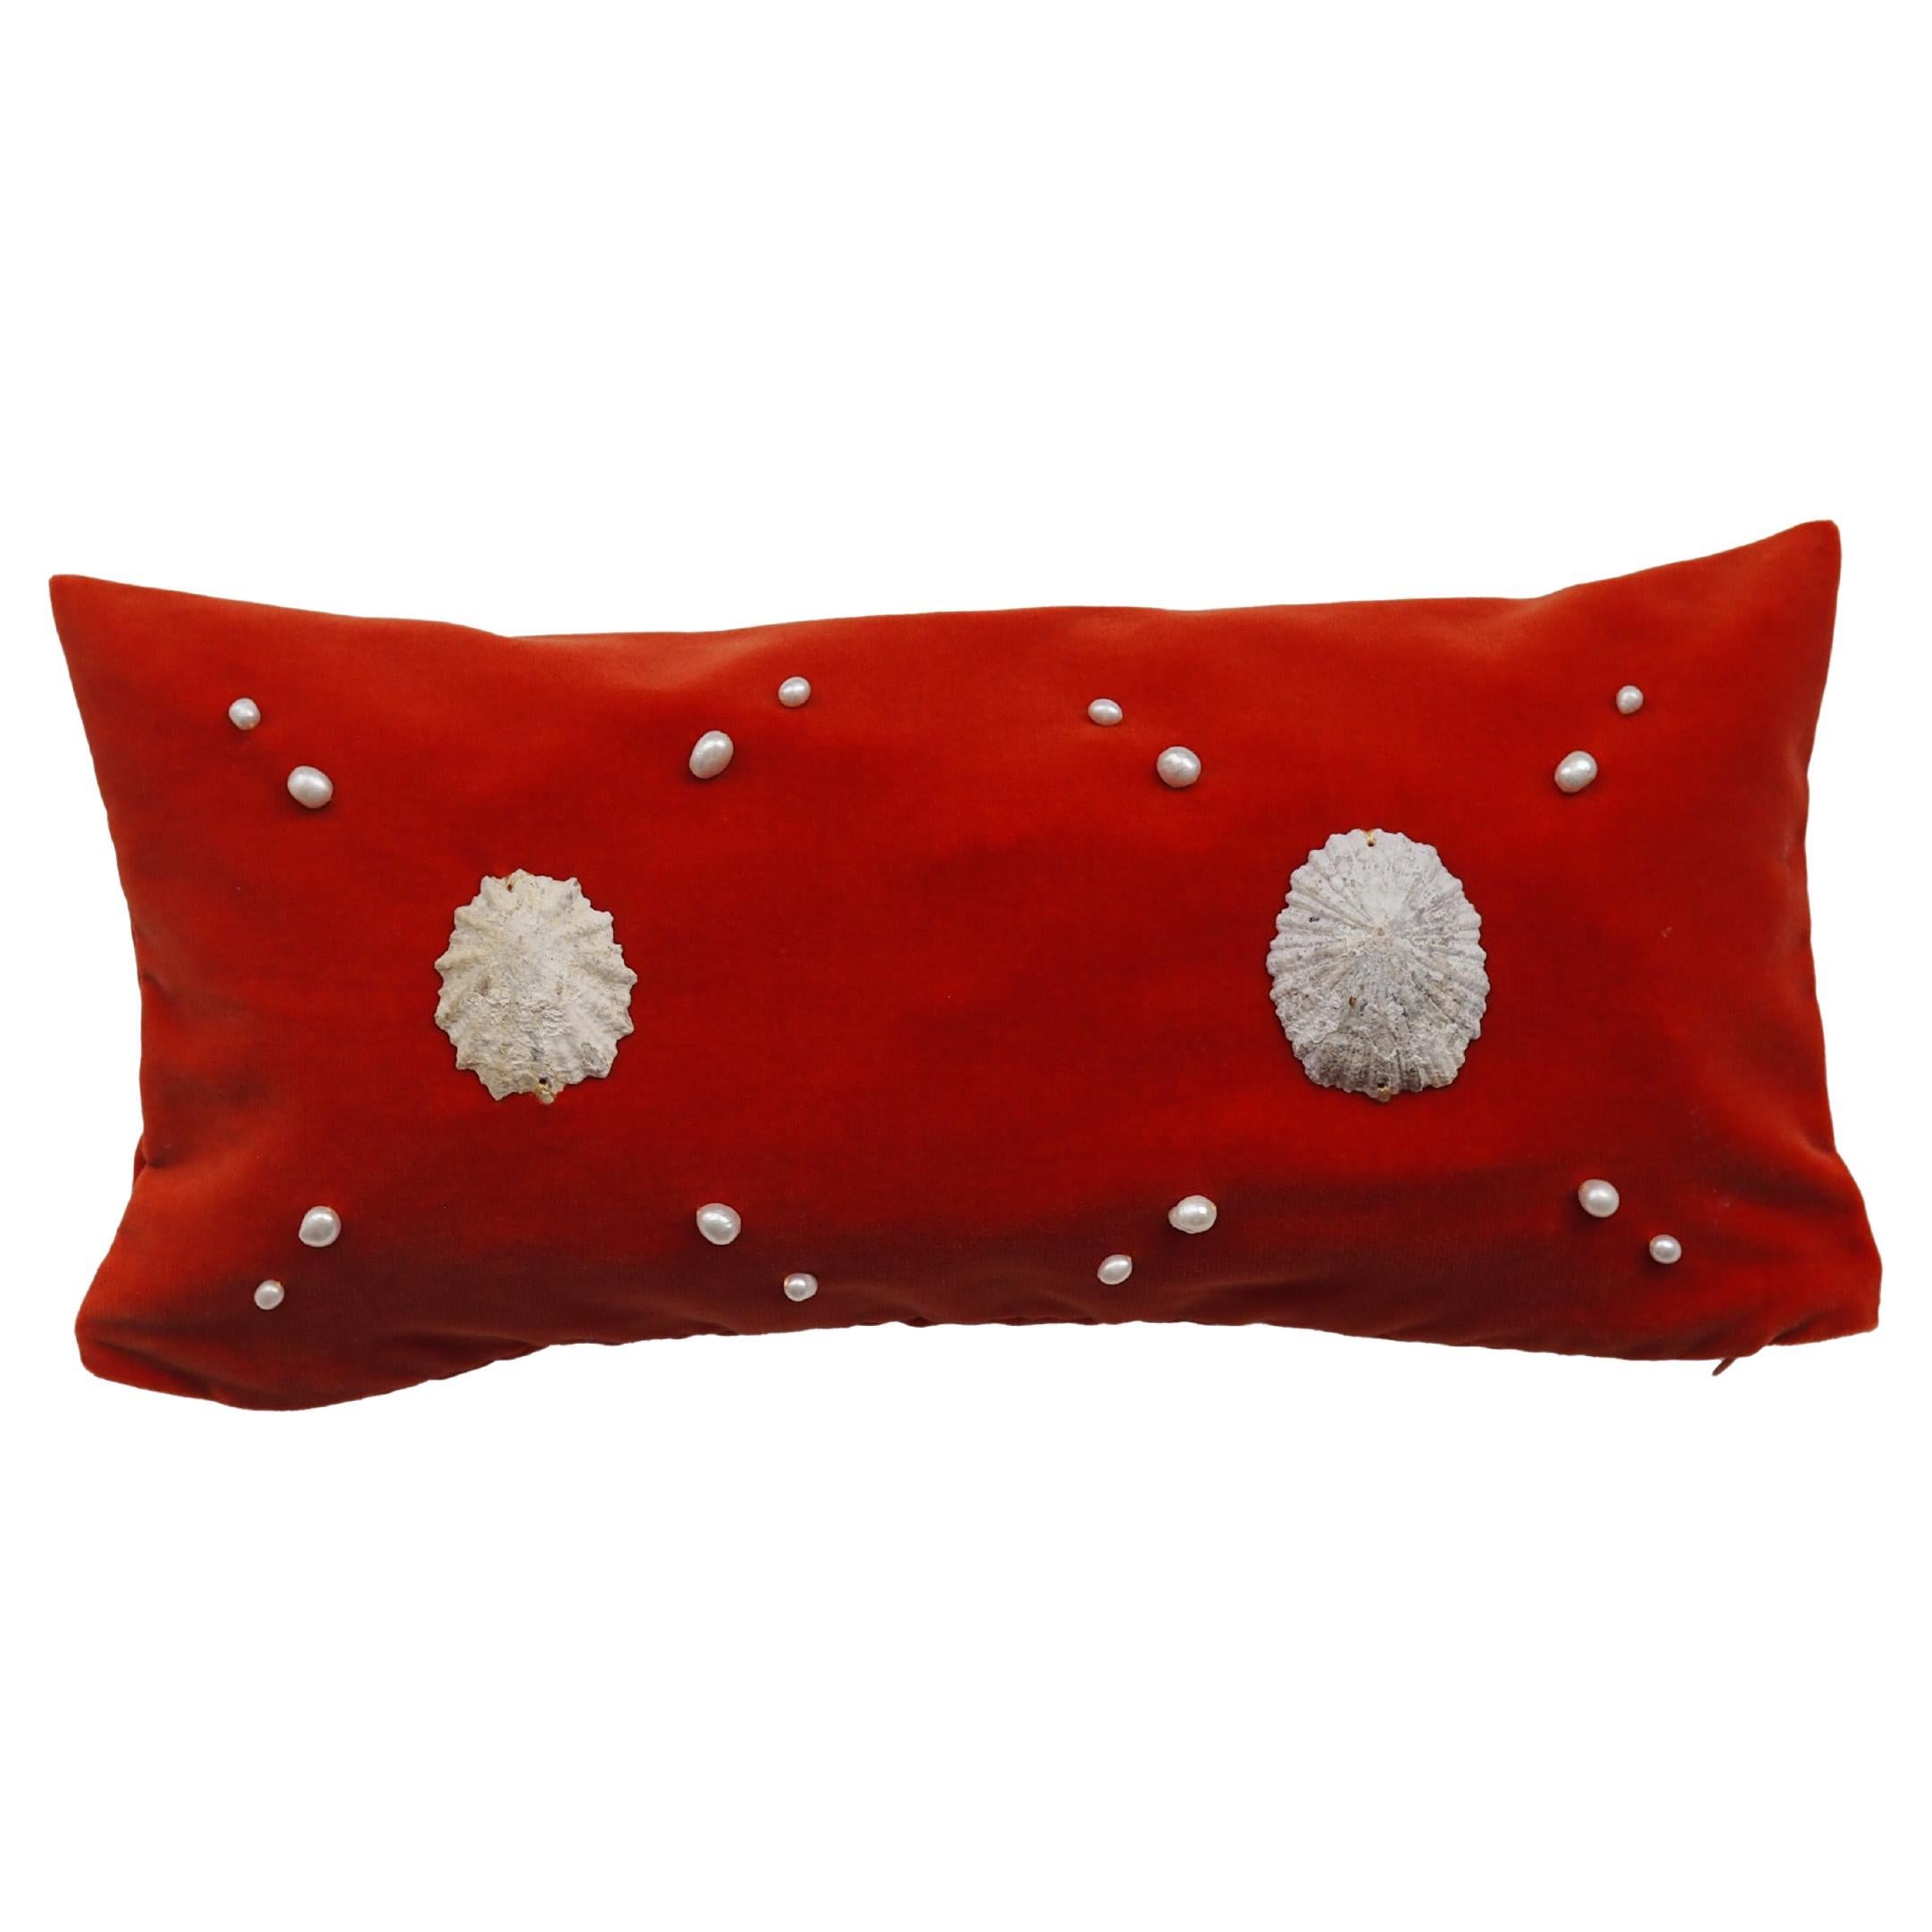 Bon Appetit 013 Decorative Cushion Culto Ponsoda 21st century desingn For Sale